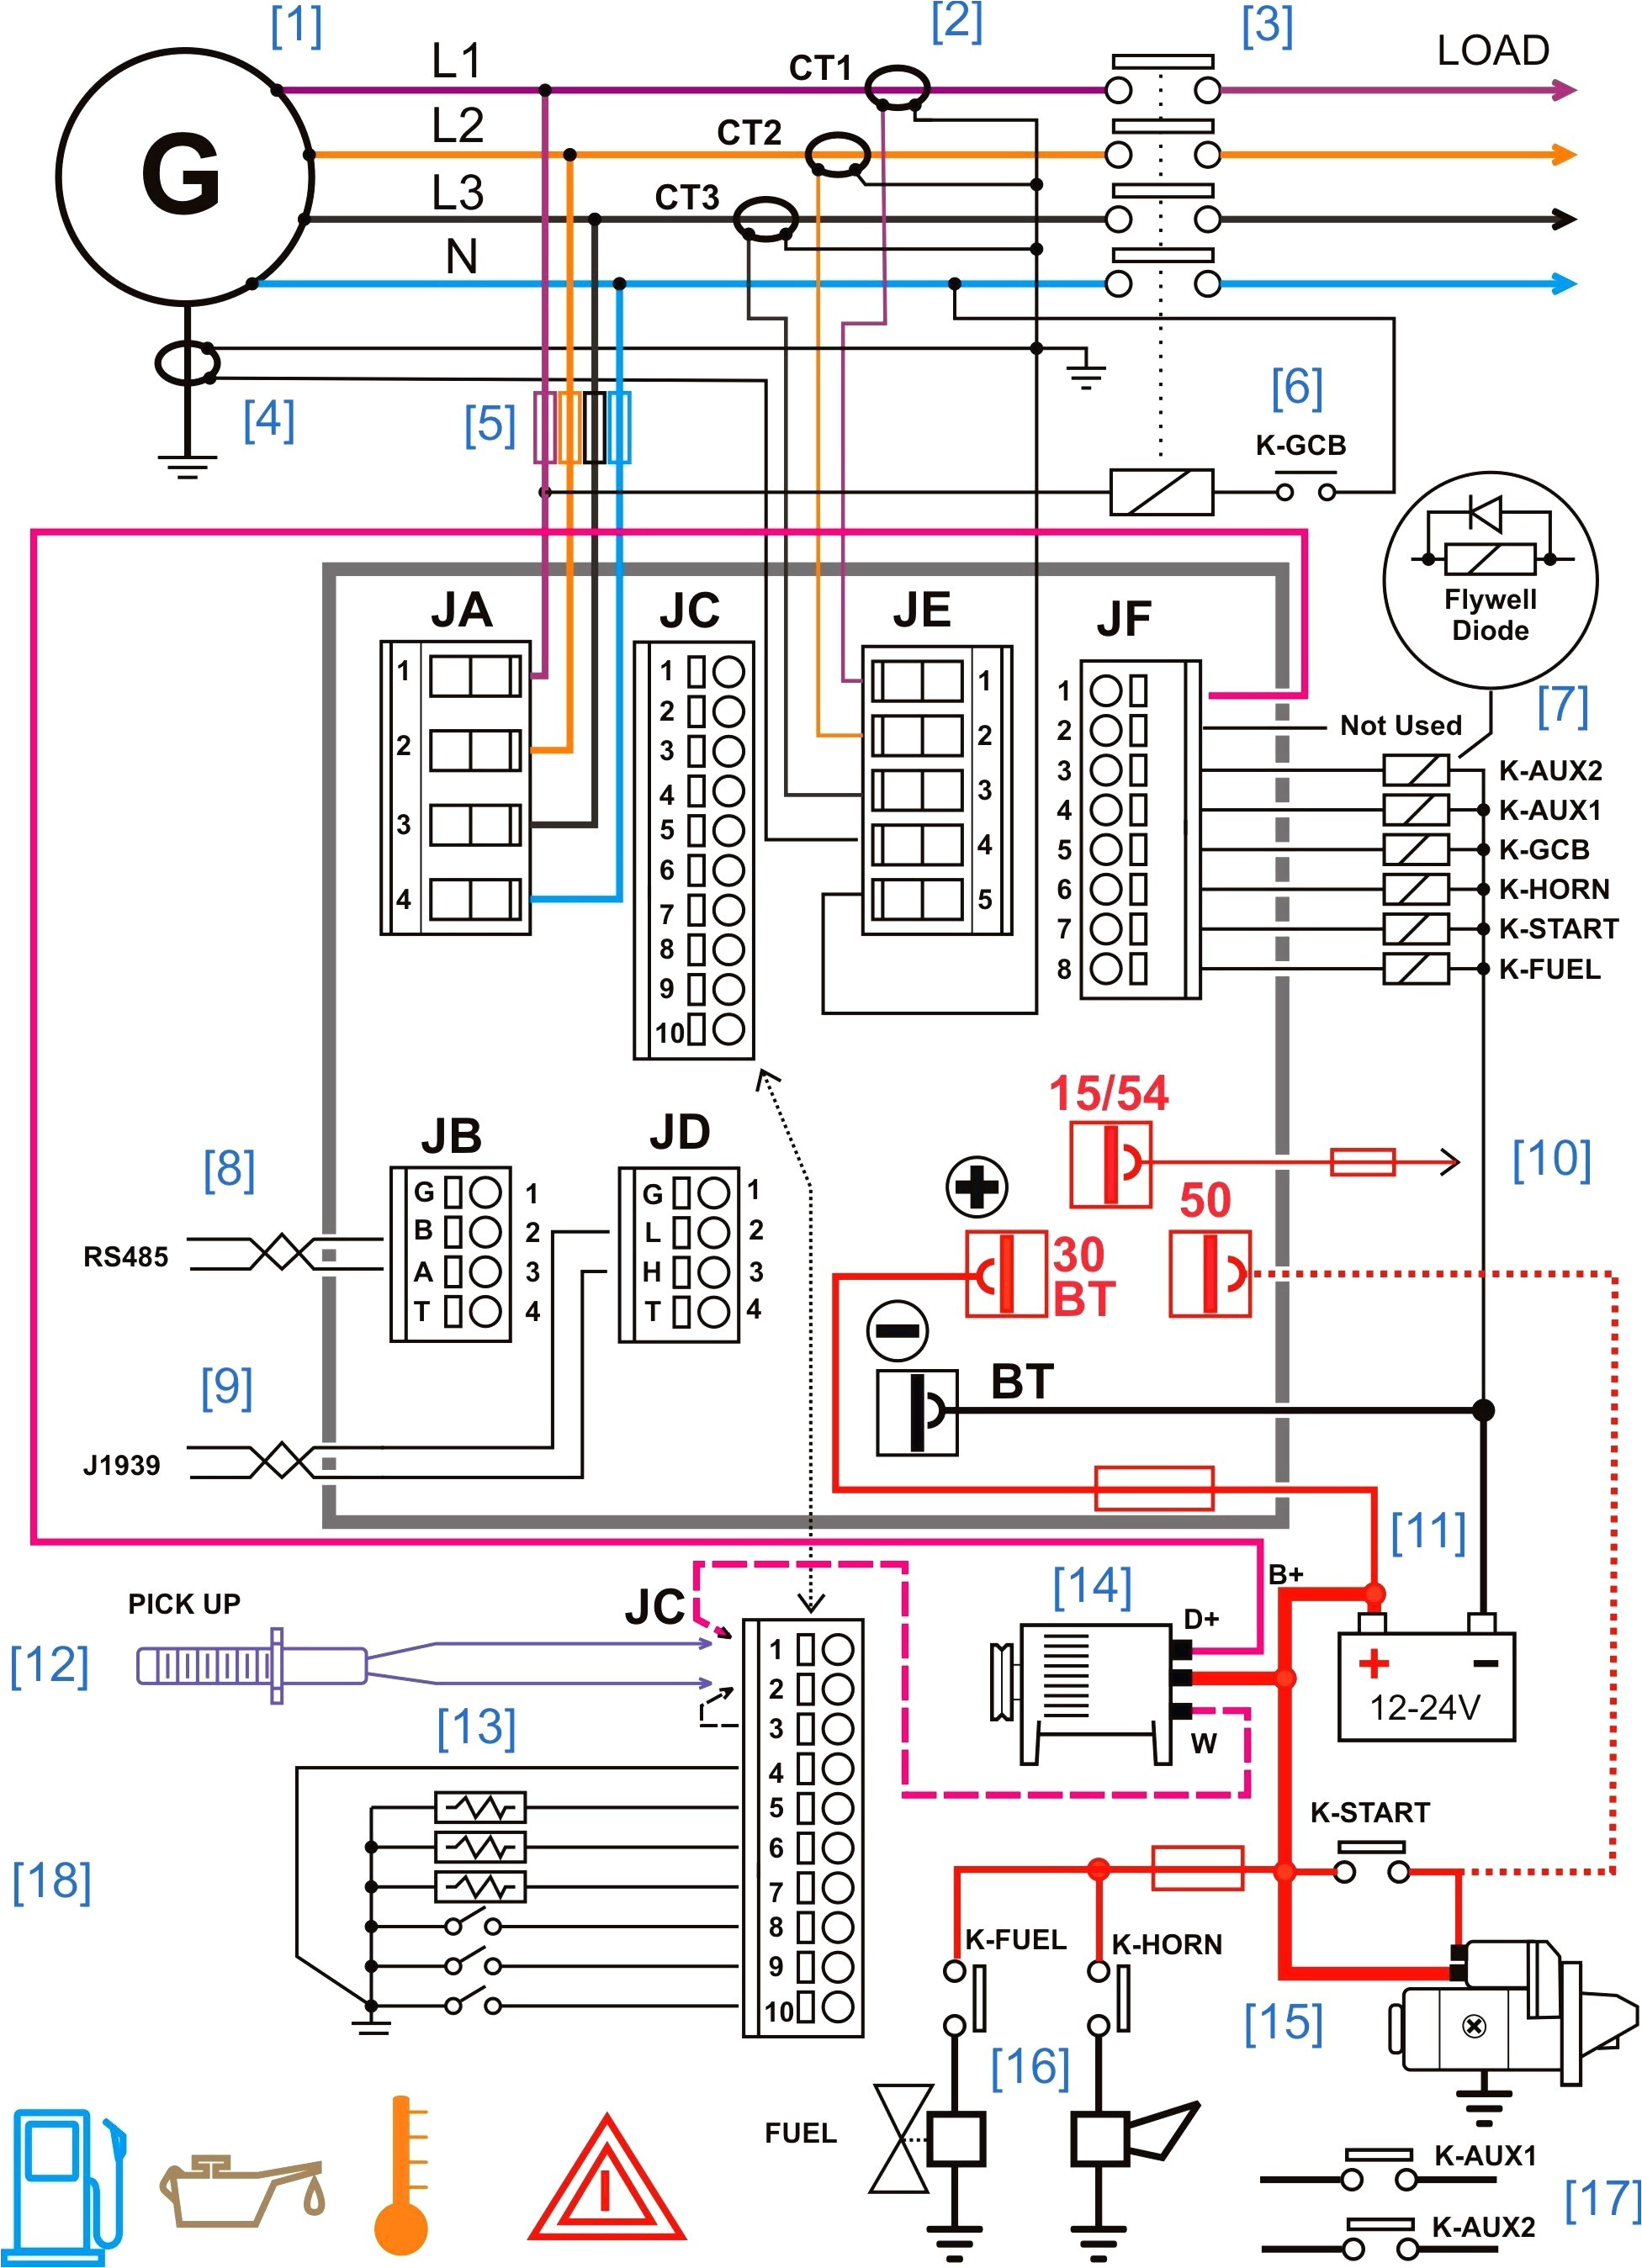 bulldog wiring diagram wiring diagram mega bulldog wiring diagrams golf gl